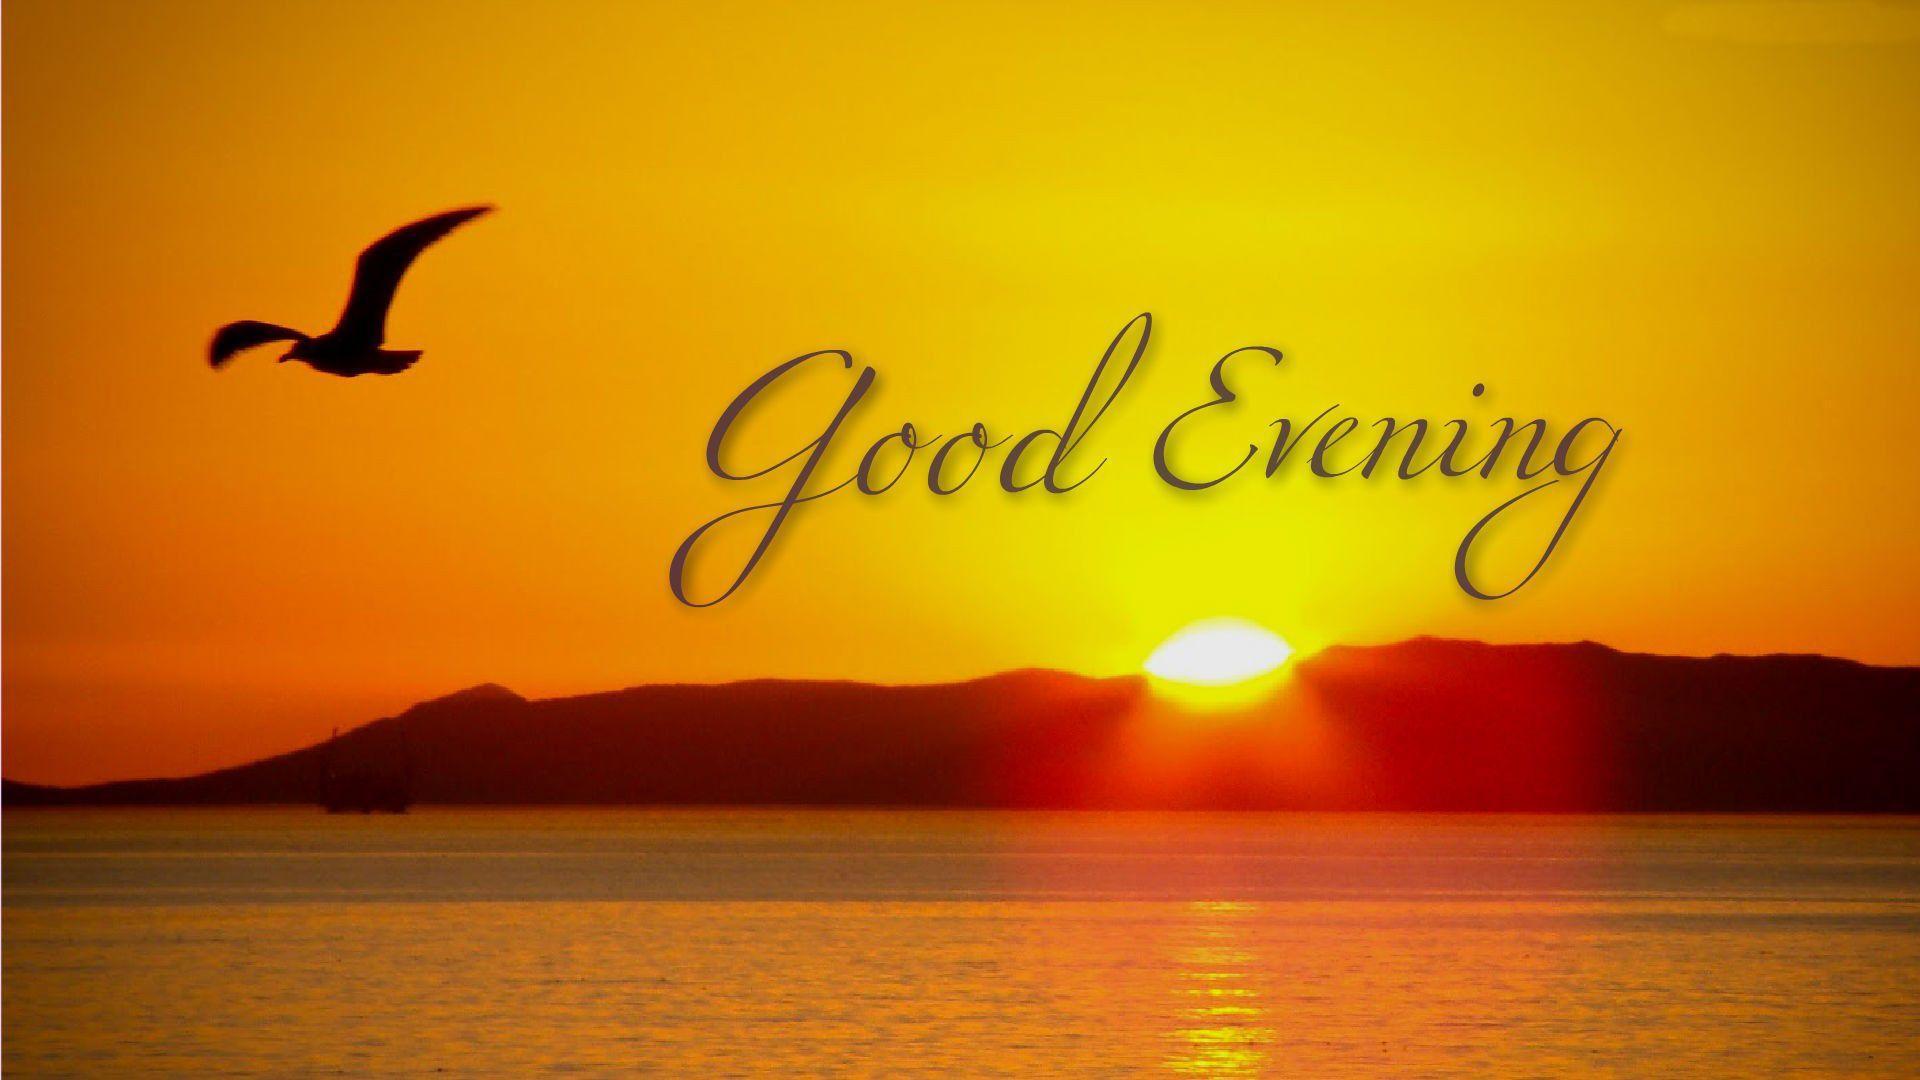 Best*} Good Evening Sms Shayari Quotes In Hindi - Hd Wallpaper Good Evening - HD Wallpaper 